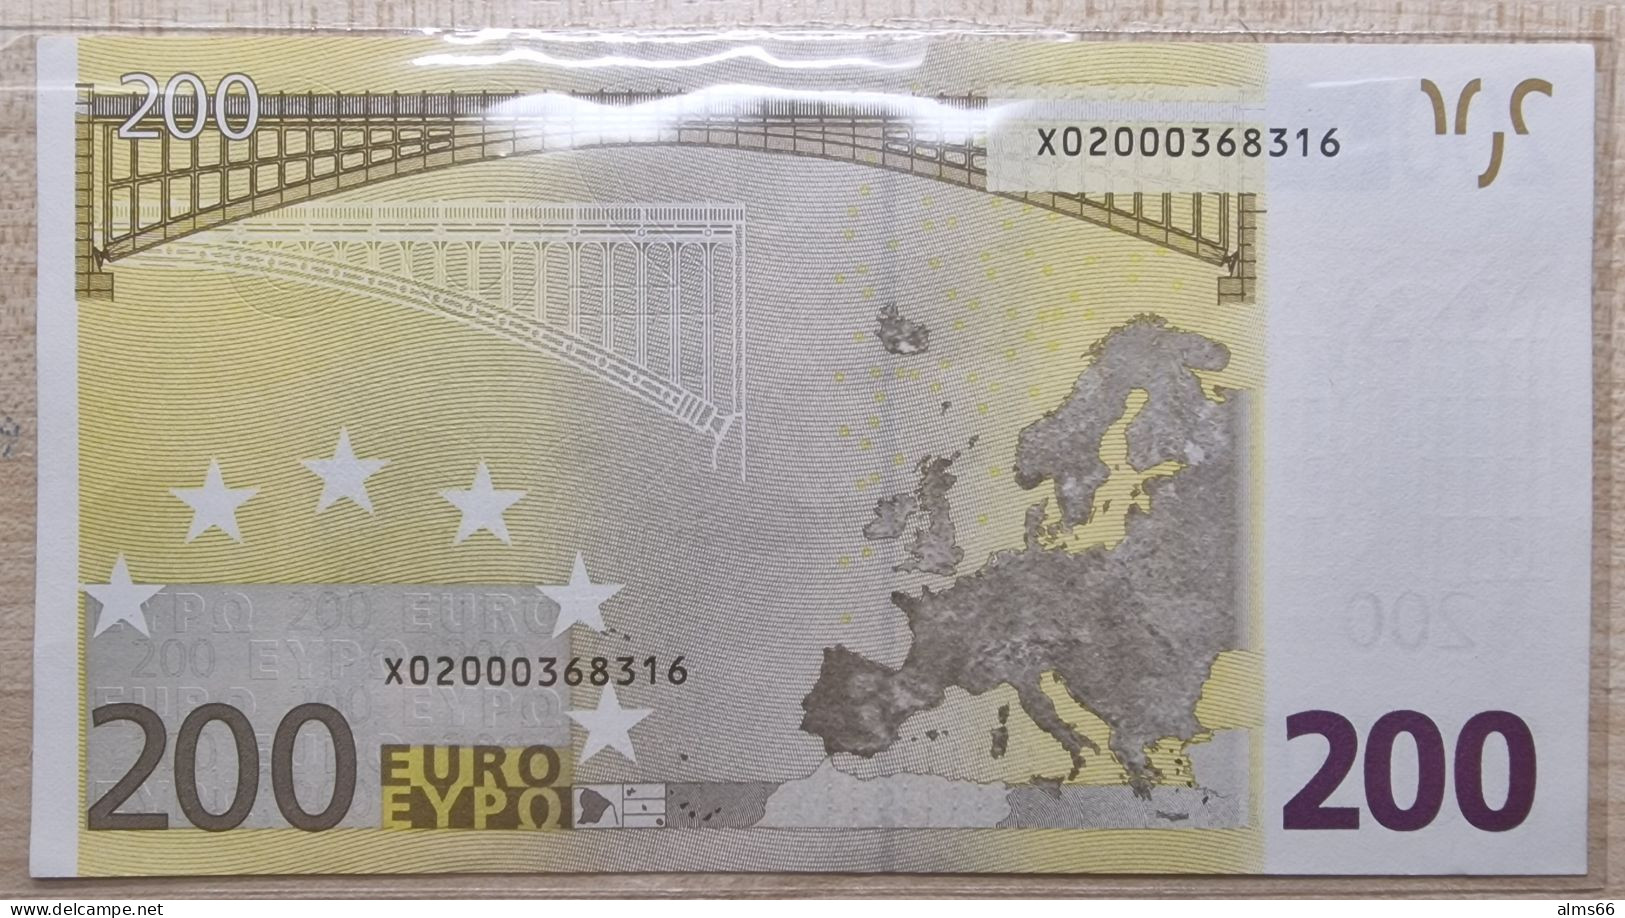 Euronotes 200 Euro 2002  UNC < X >< R006 > Germany Duisenberg - 200 Euro